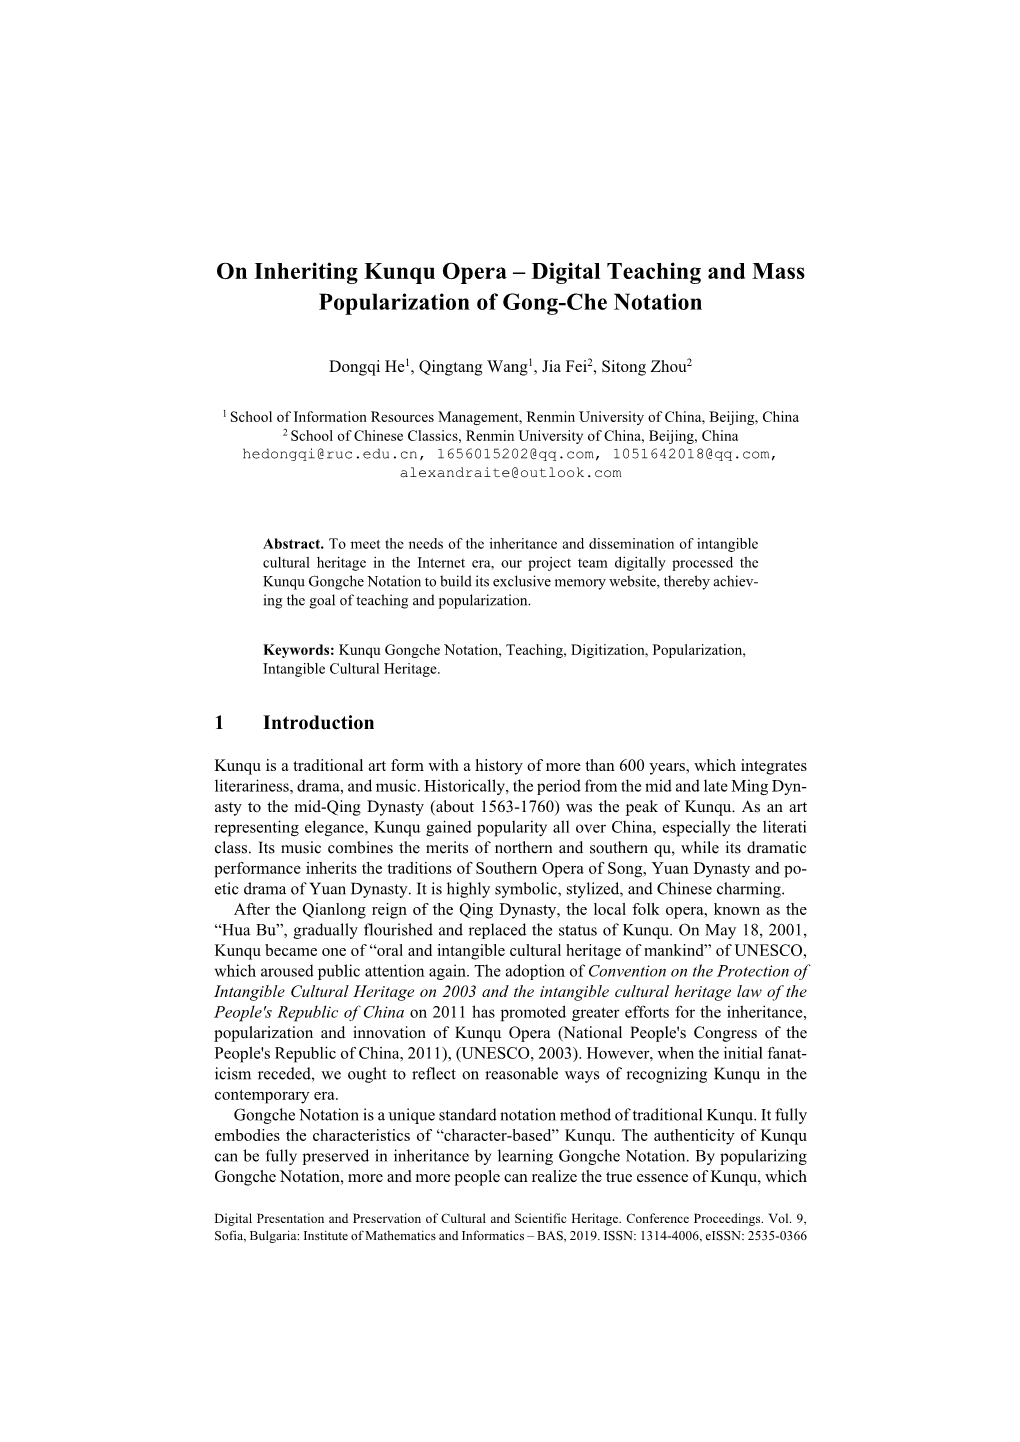 On Inheriting Kunqu Opera – Digital Teaching and Mass Popularization of Gong-Che Notation